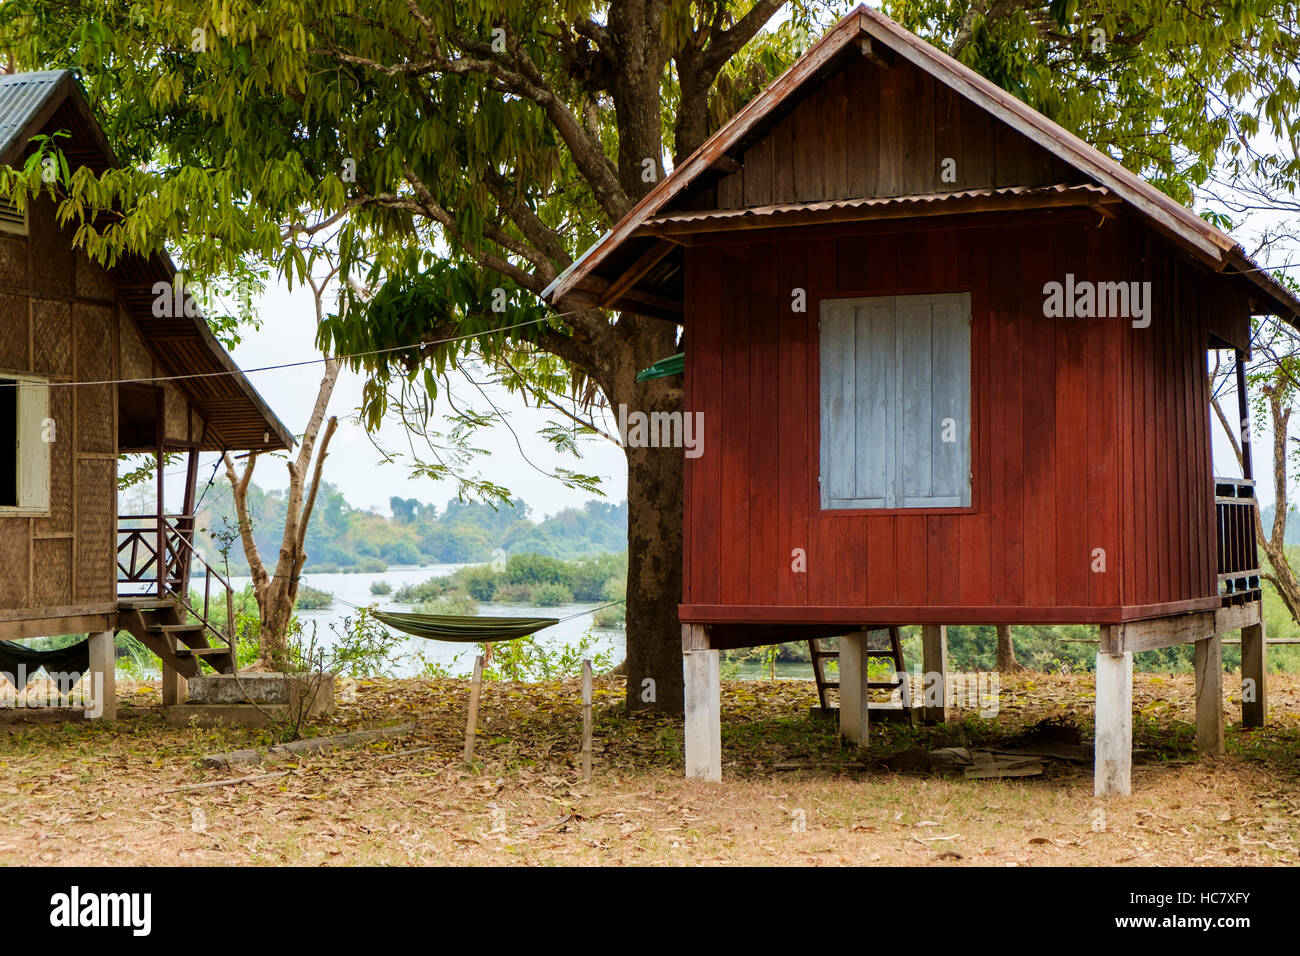 Bungalows am Mekong Ufer, Insel Don Det, 4000 Inseln (Si Phan Don), Laos. Stockfoto